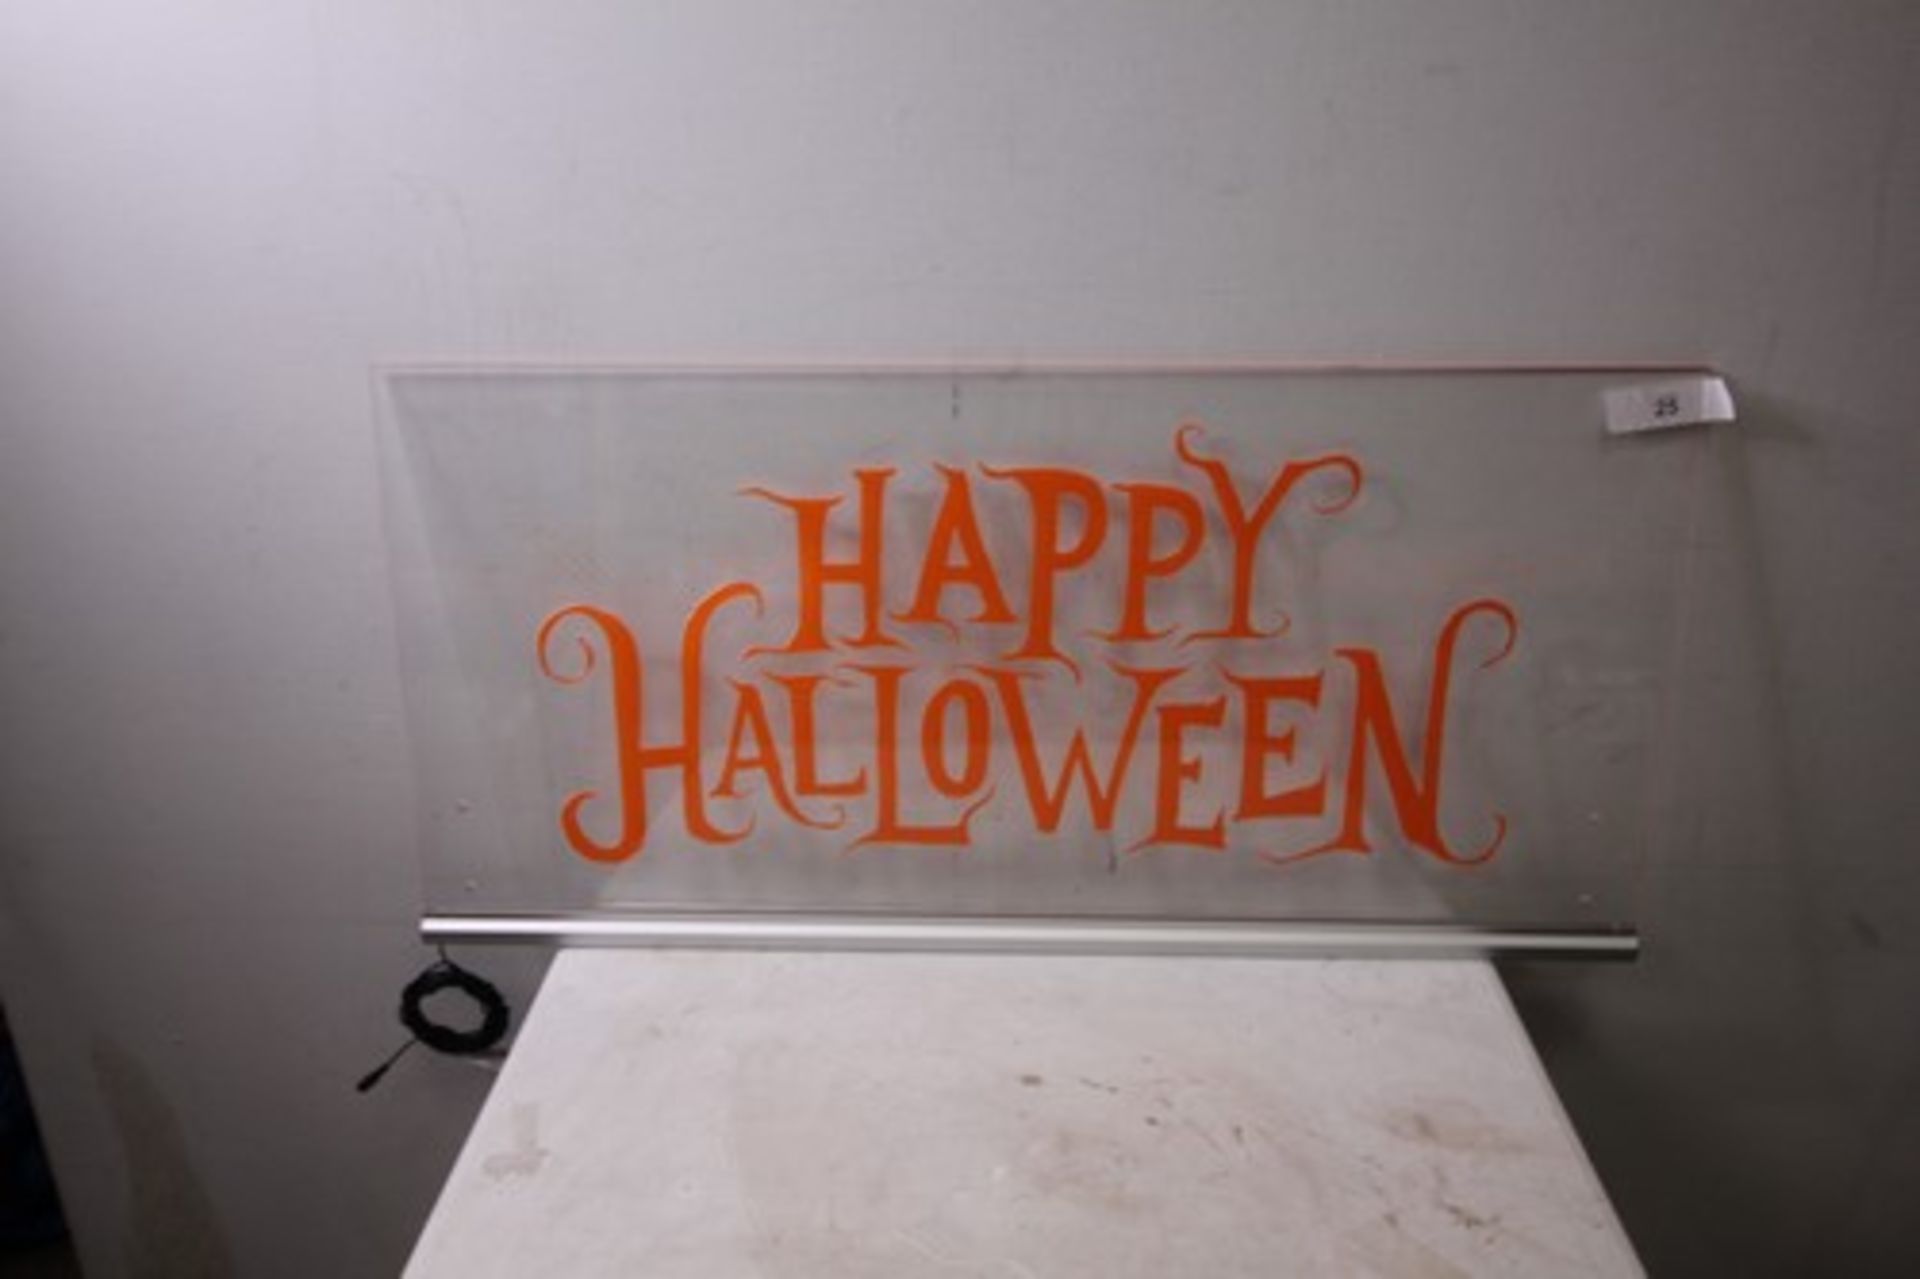 1 x Illuminate Perspex "Happy Halloween" sign, size 110 x 53cm - New (ES1)